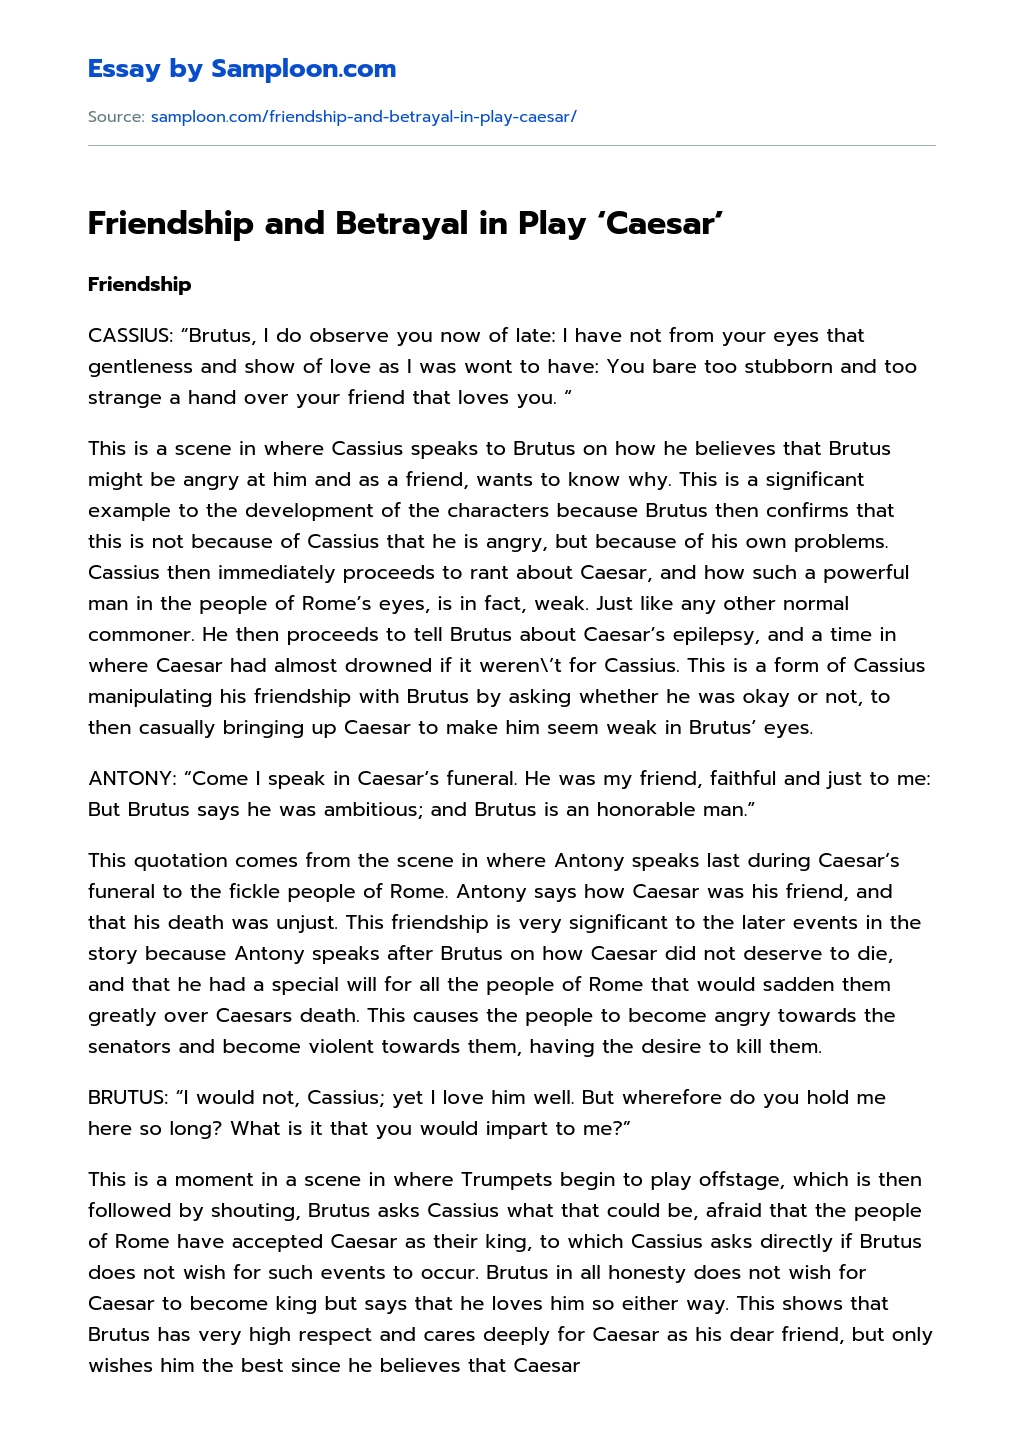 Friendship and Betrayal in Play ‘Caesar’ Summary essay